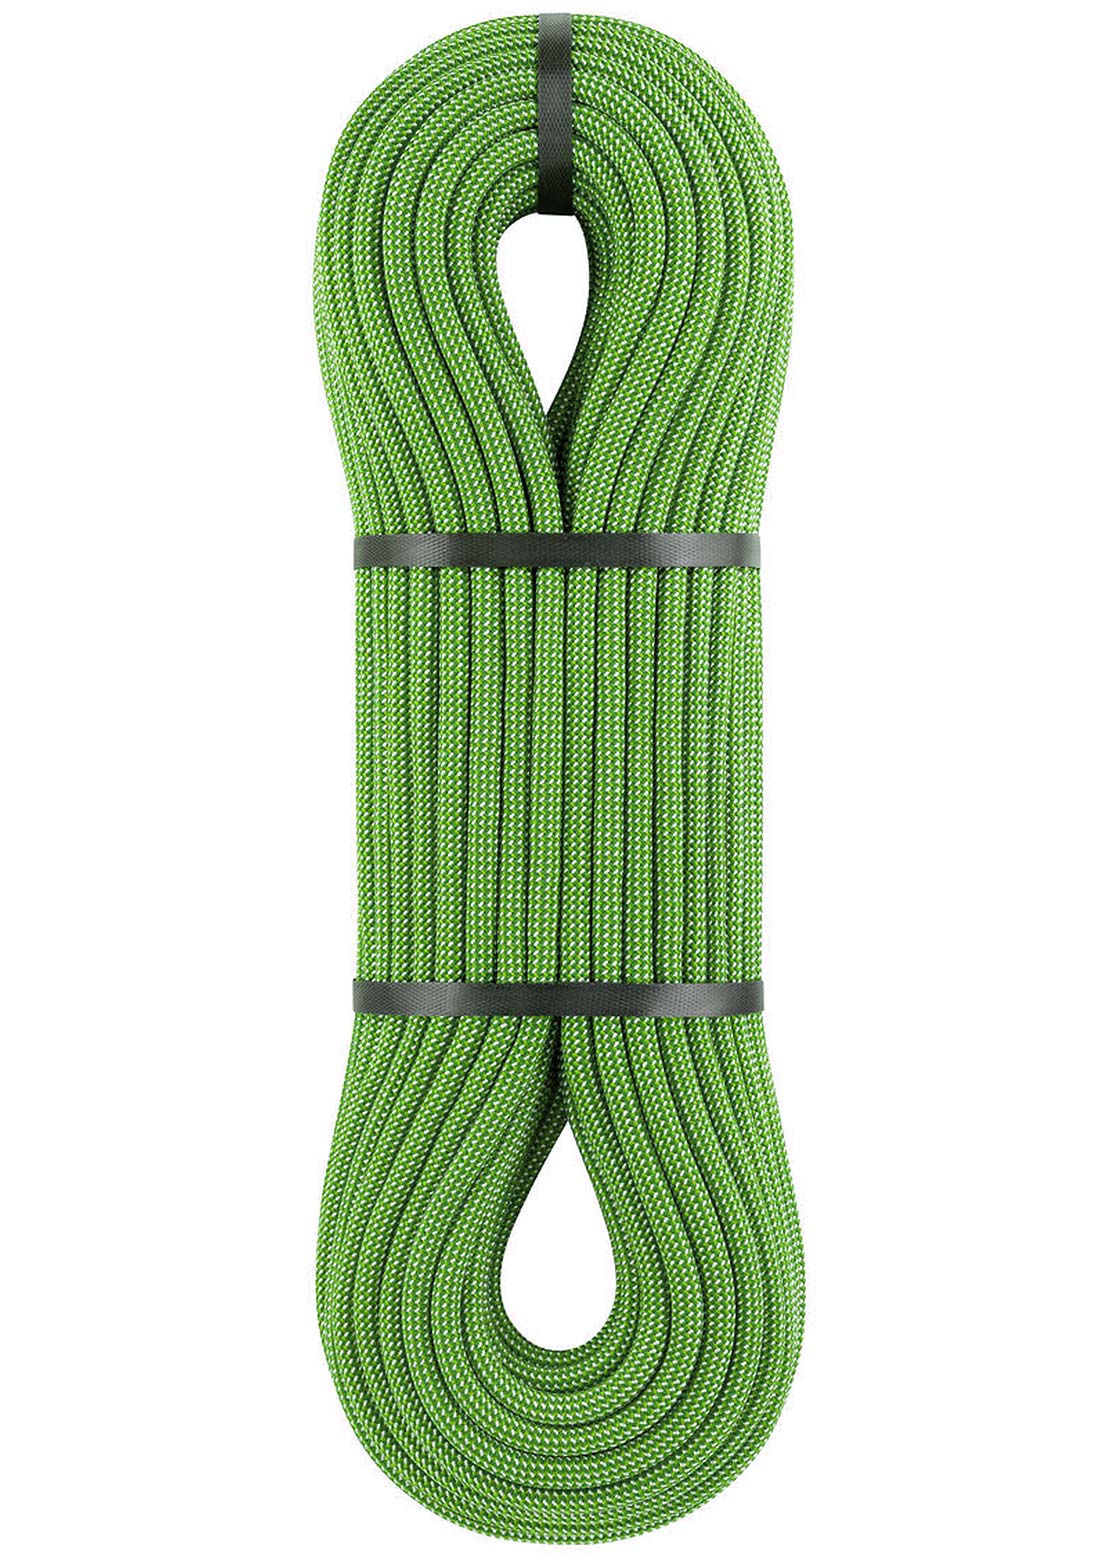 Petzl Contact 9.8mm Climbing Rope - 70m Green